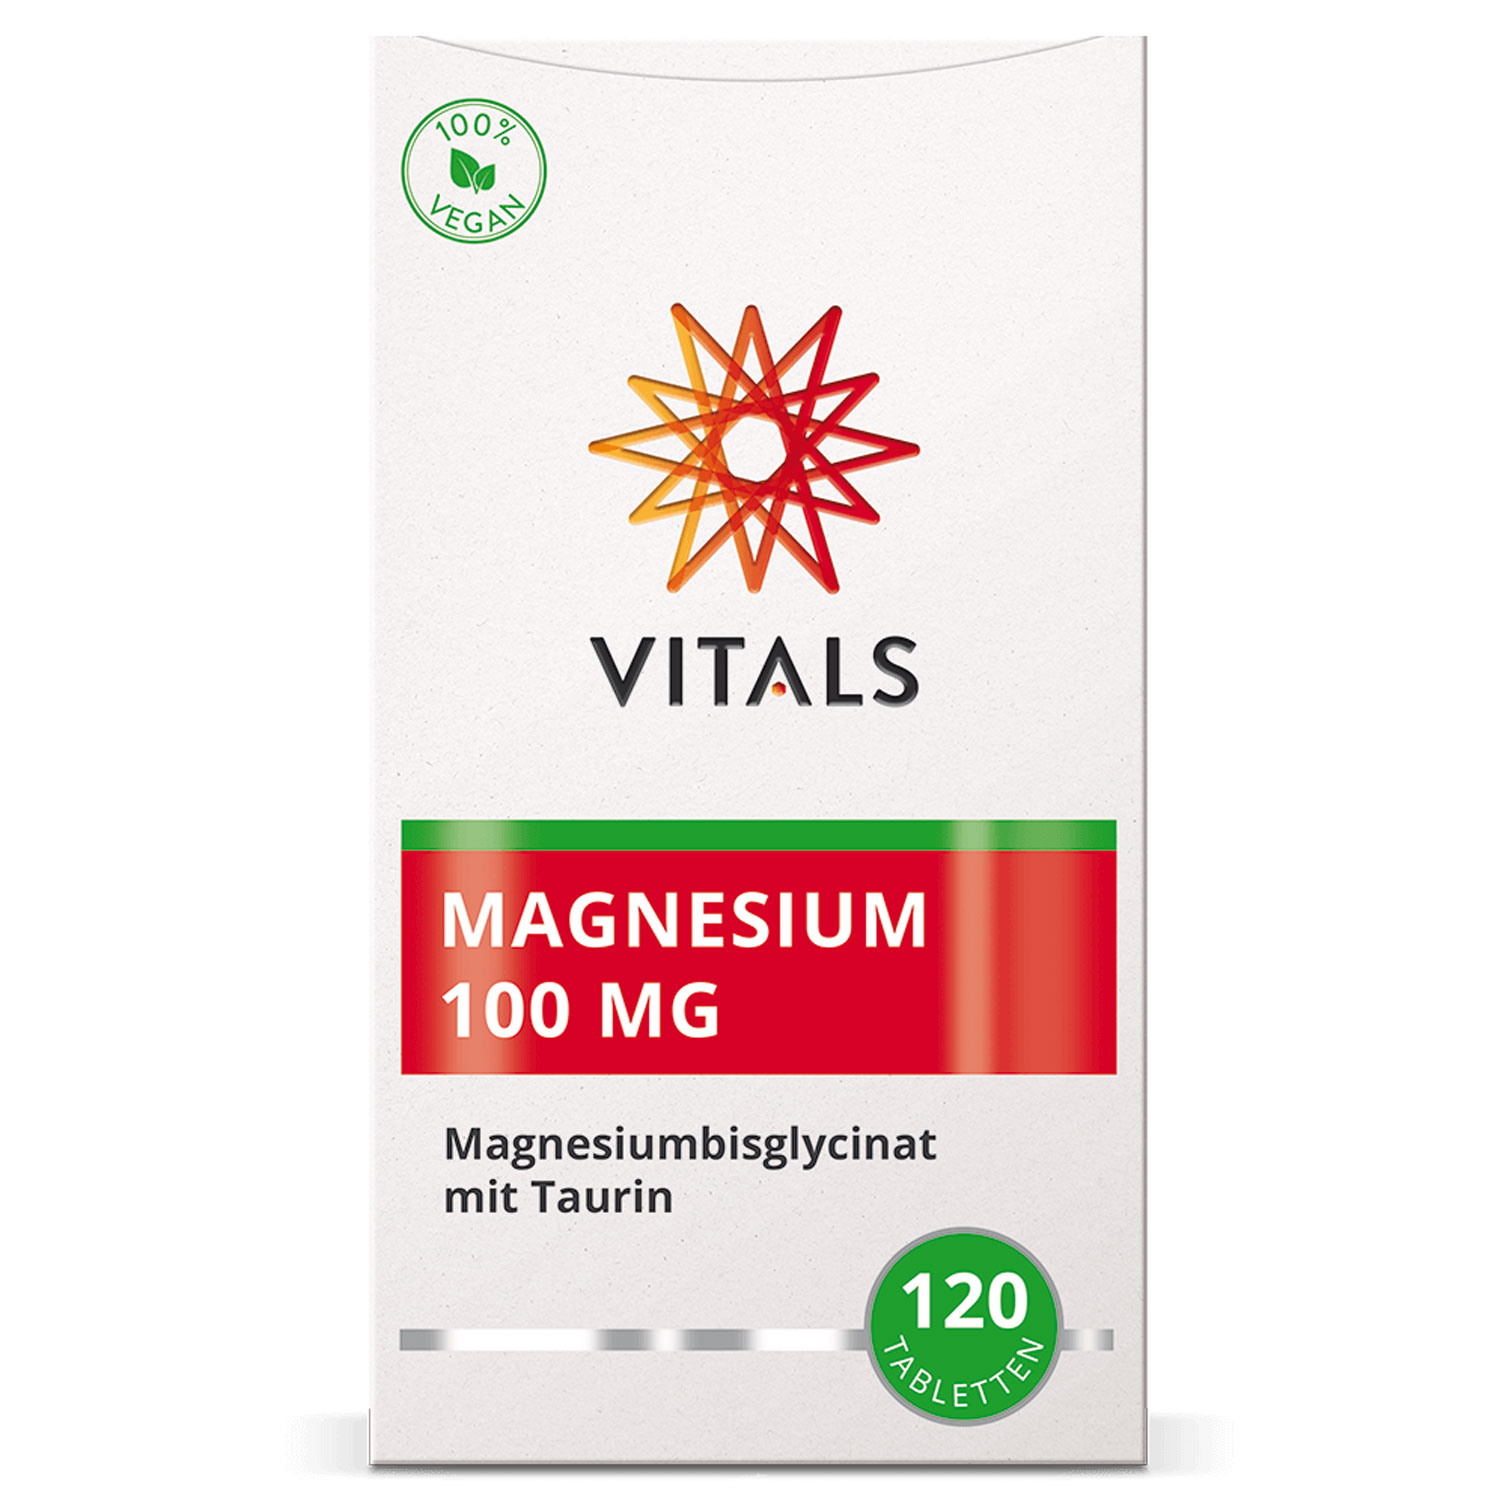 Magnesiumbisglycinat von Vitals - Verpackung